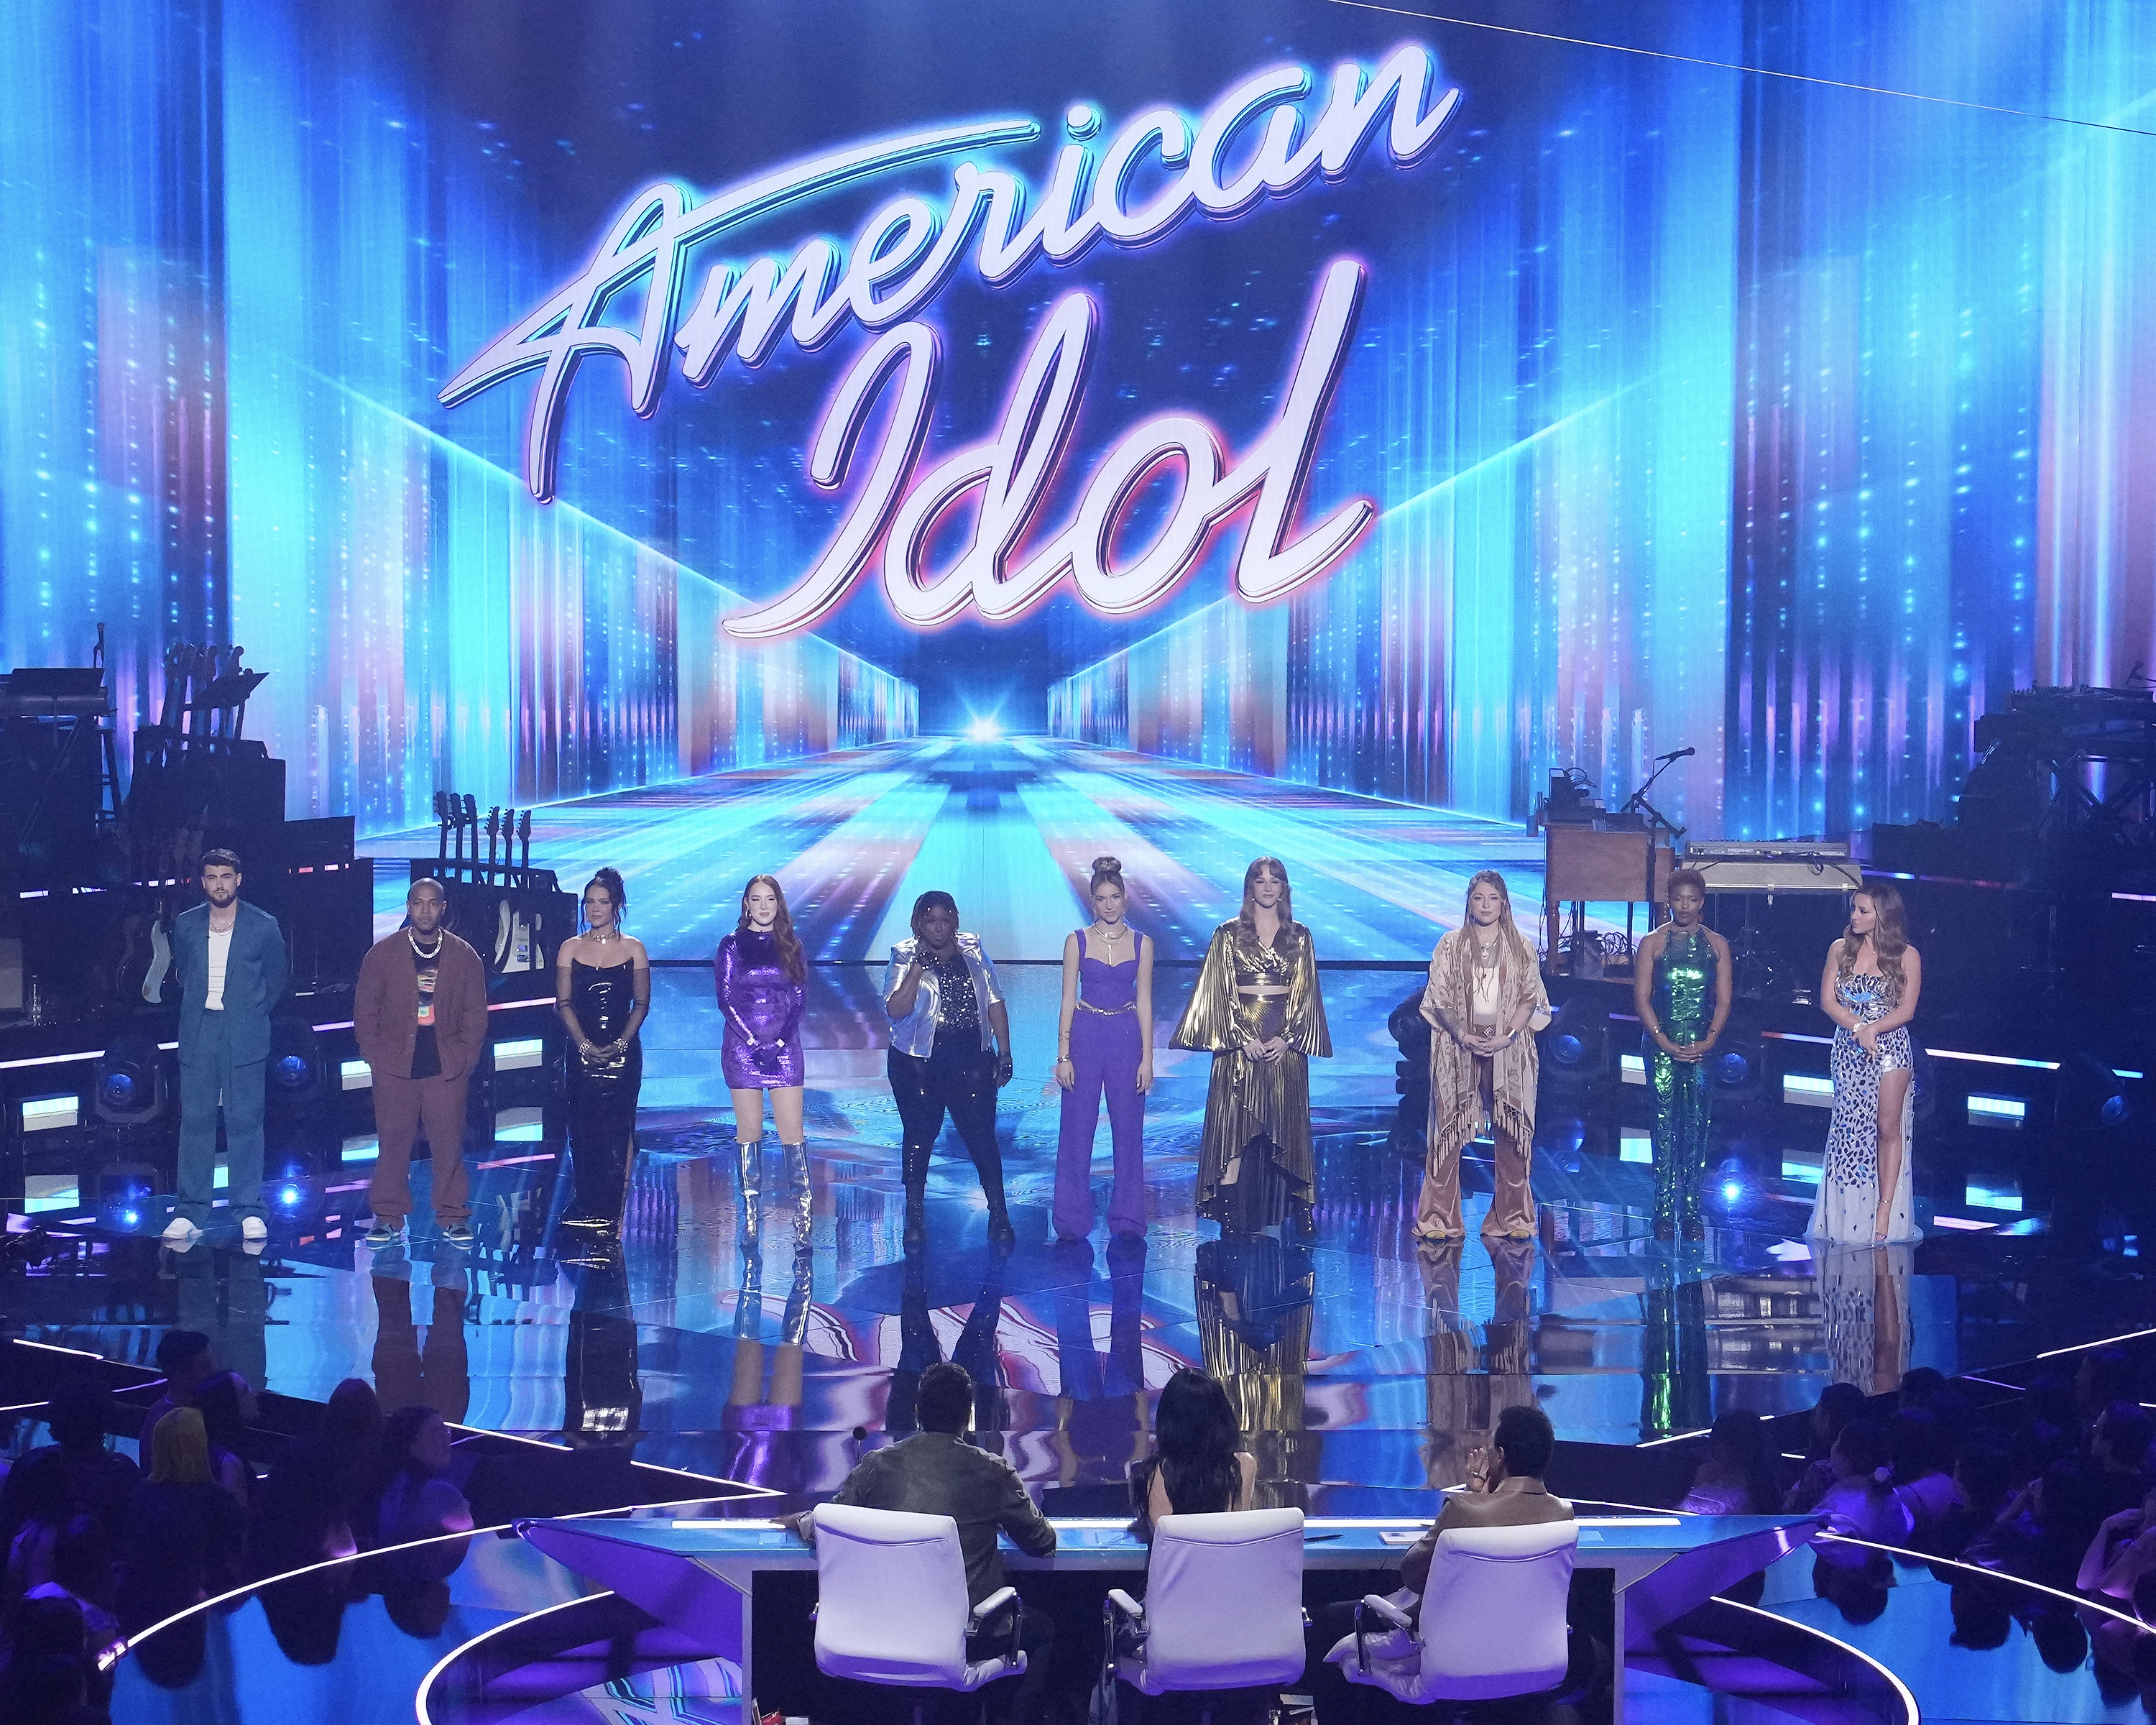 The American Idol